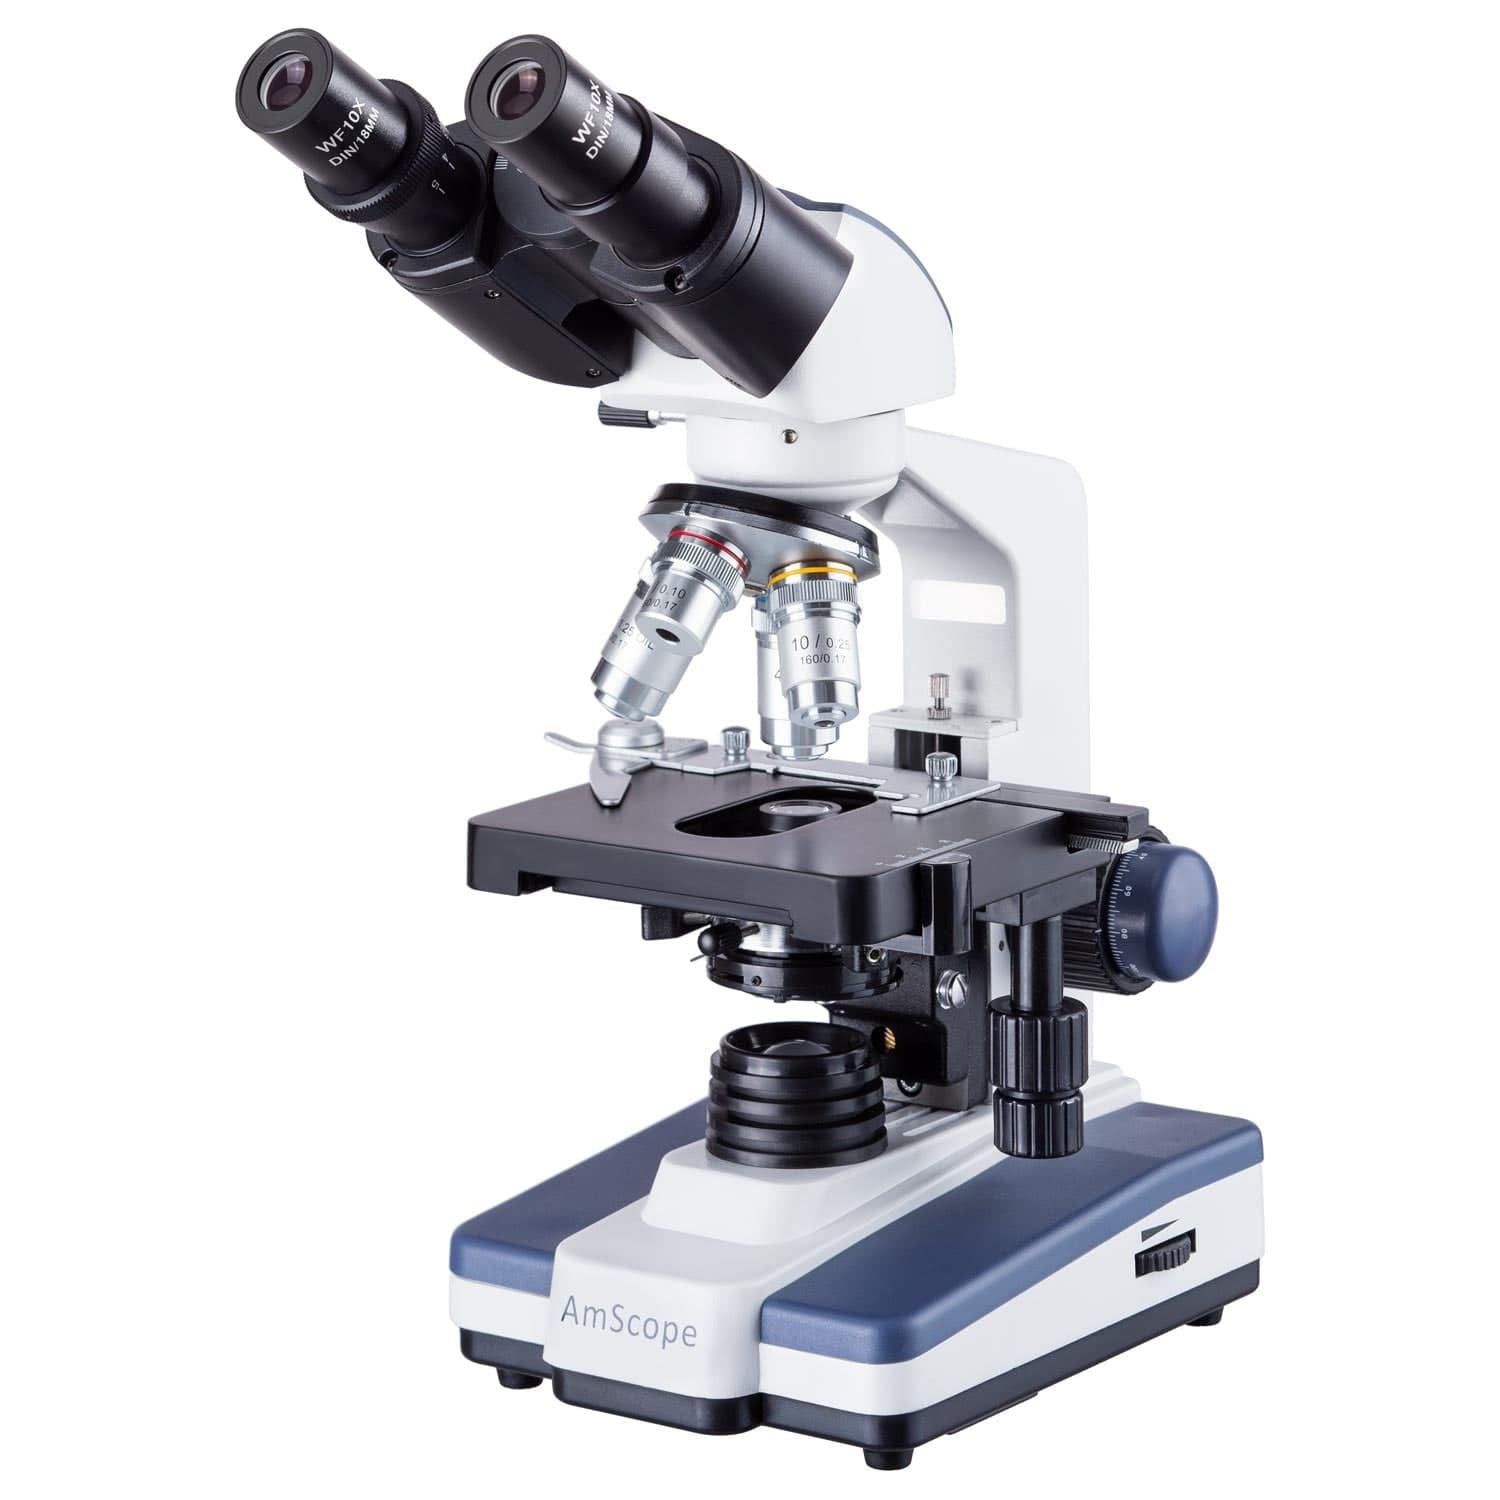 Shop AmScope's best seller microscopes!